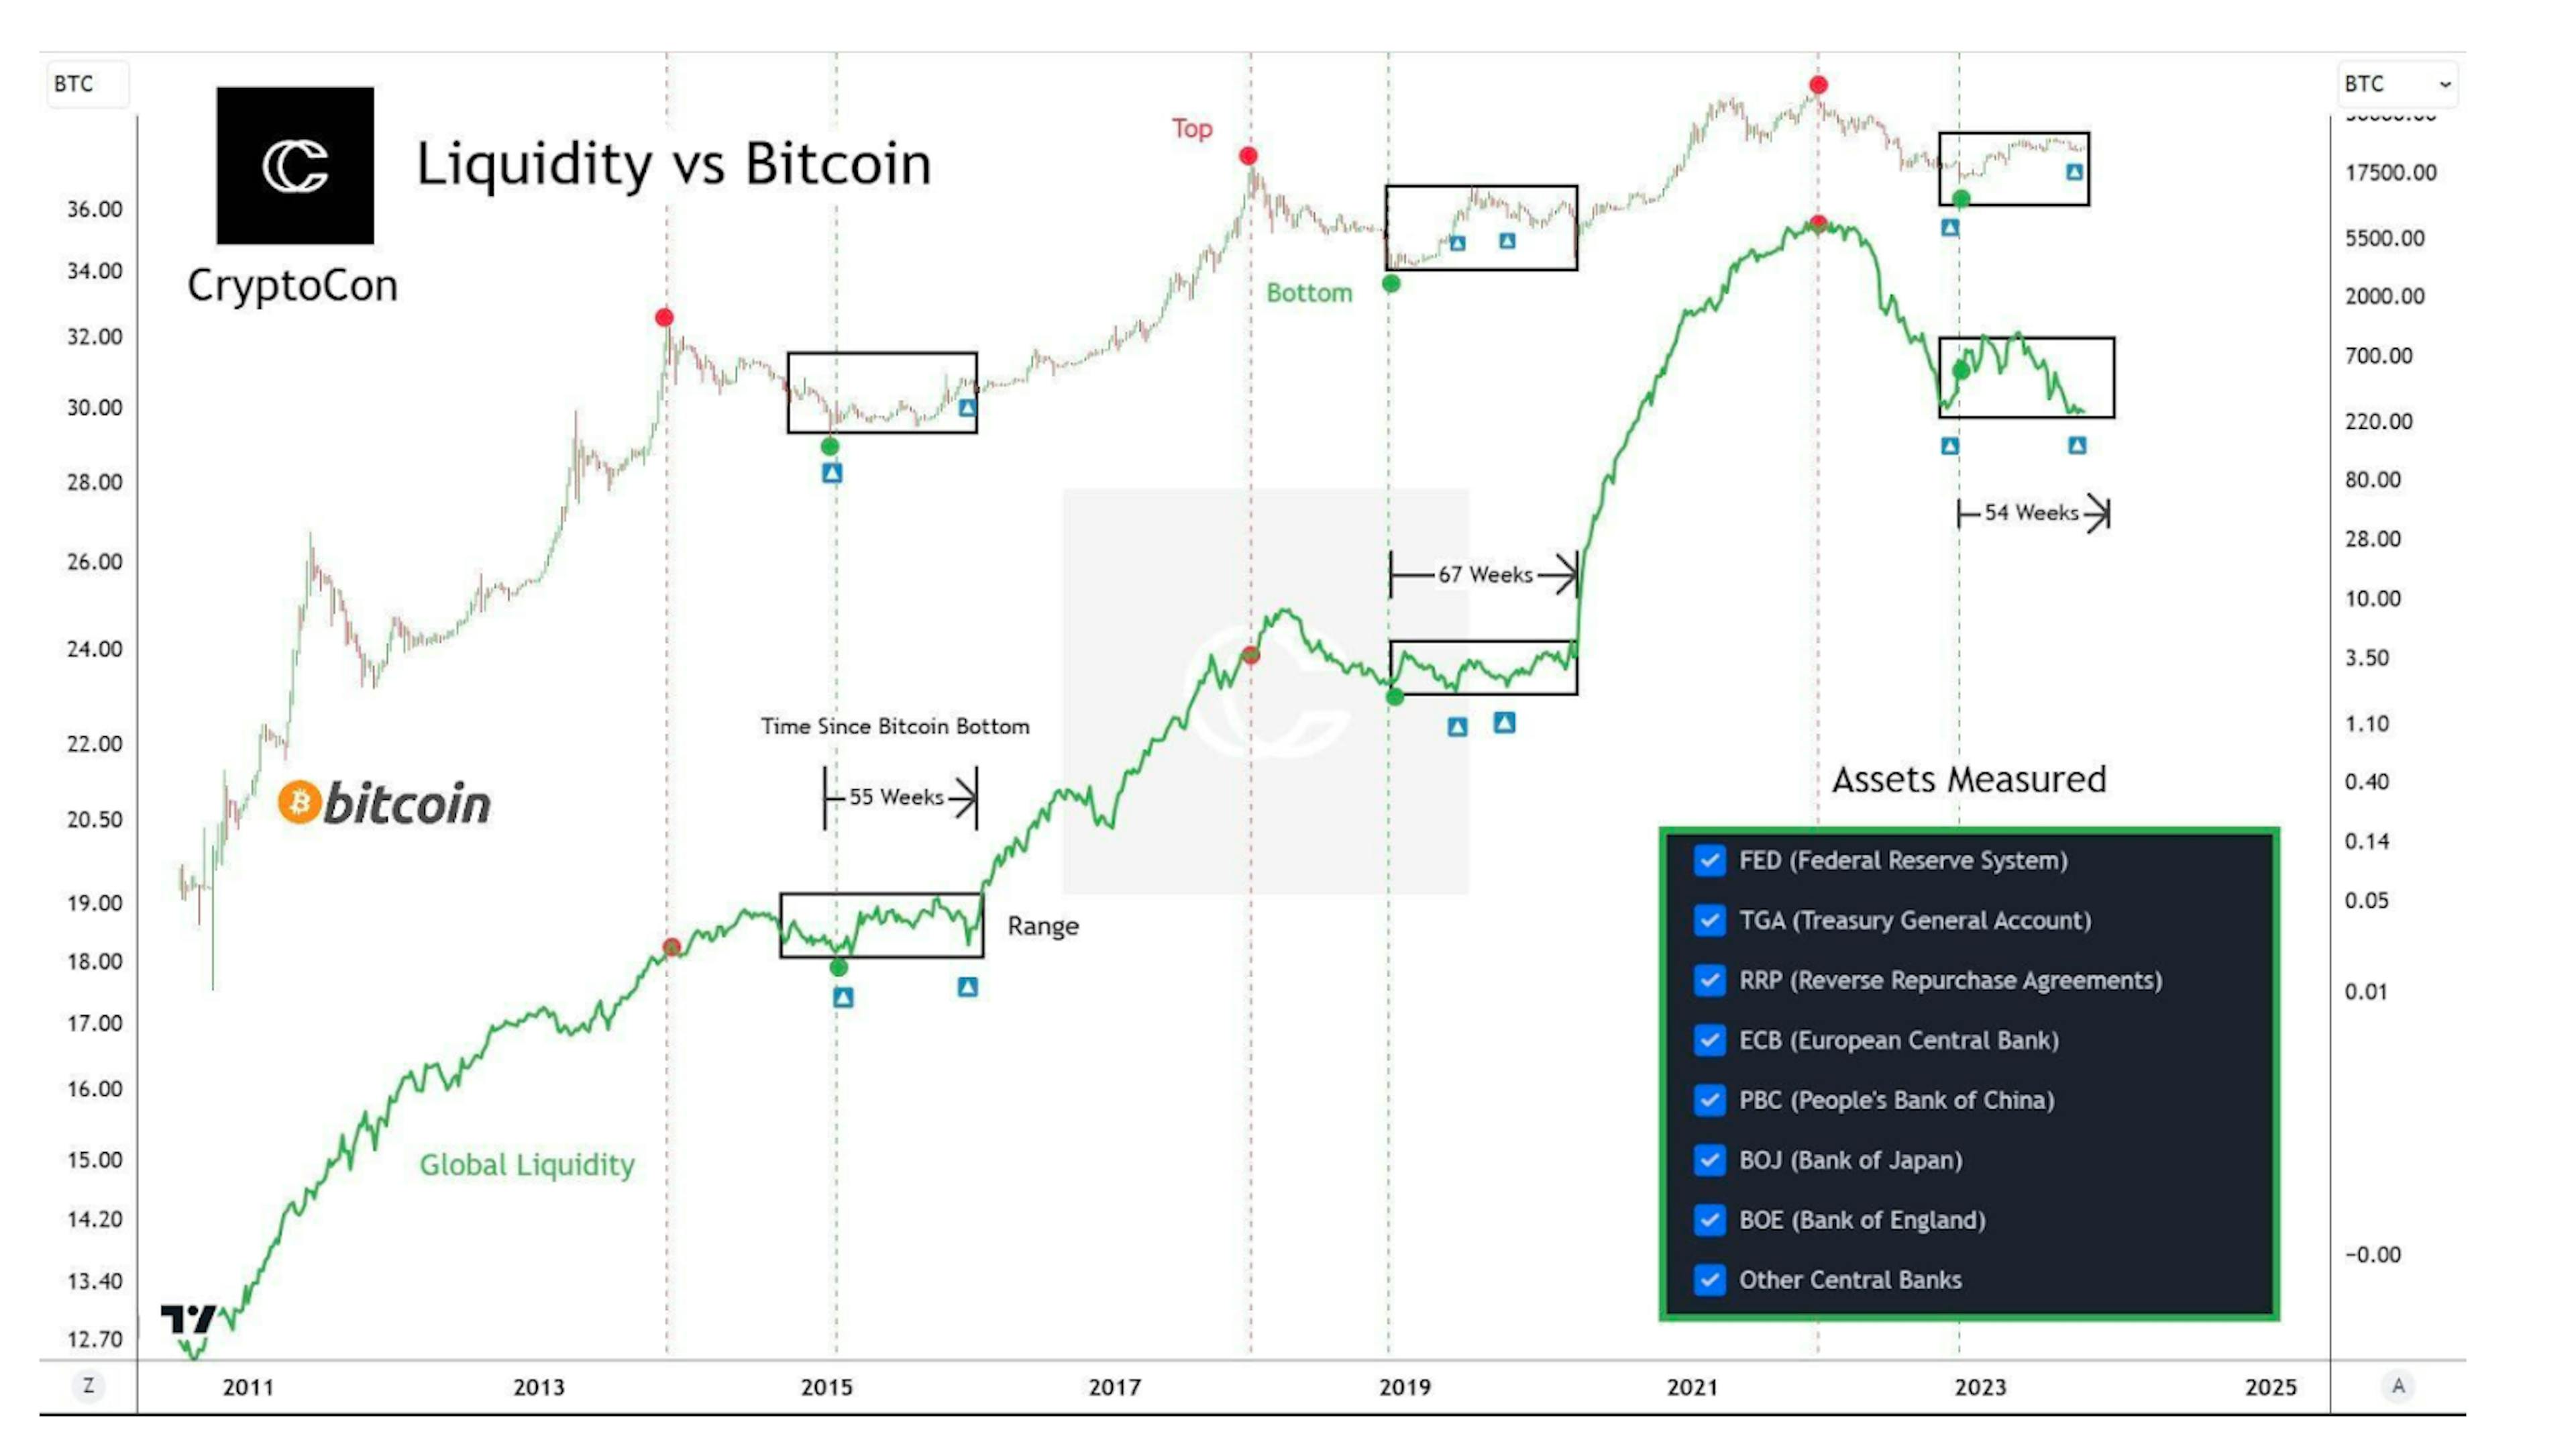 Liquidity vs Bitcoin